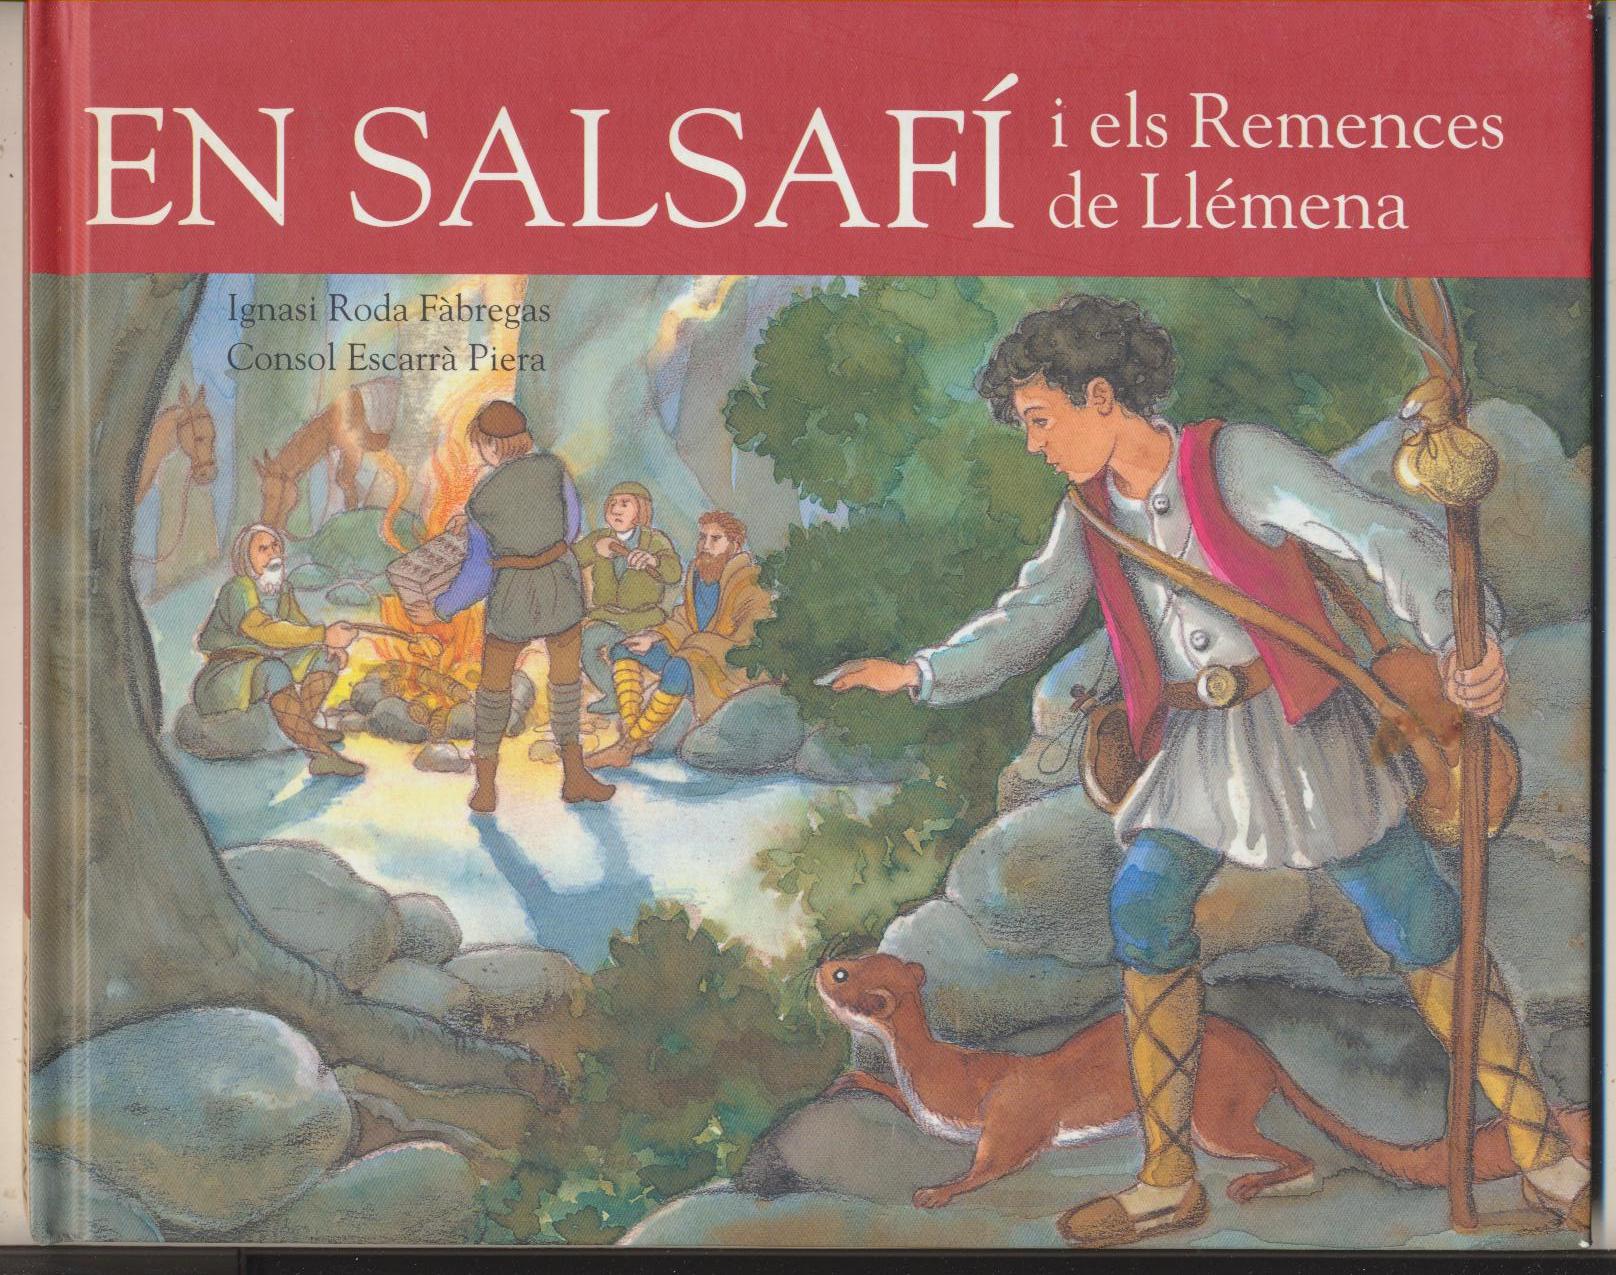 En Salsafí i els Remences de Llémena. Ignasi Roda Fábregas. 1ª Edición ING 2010